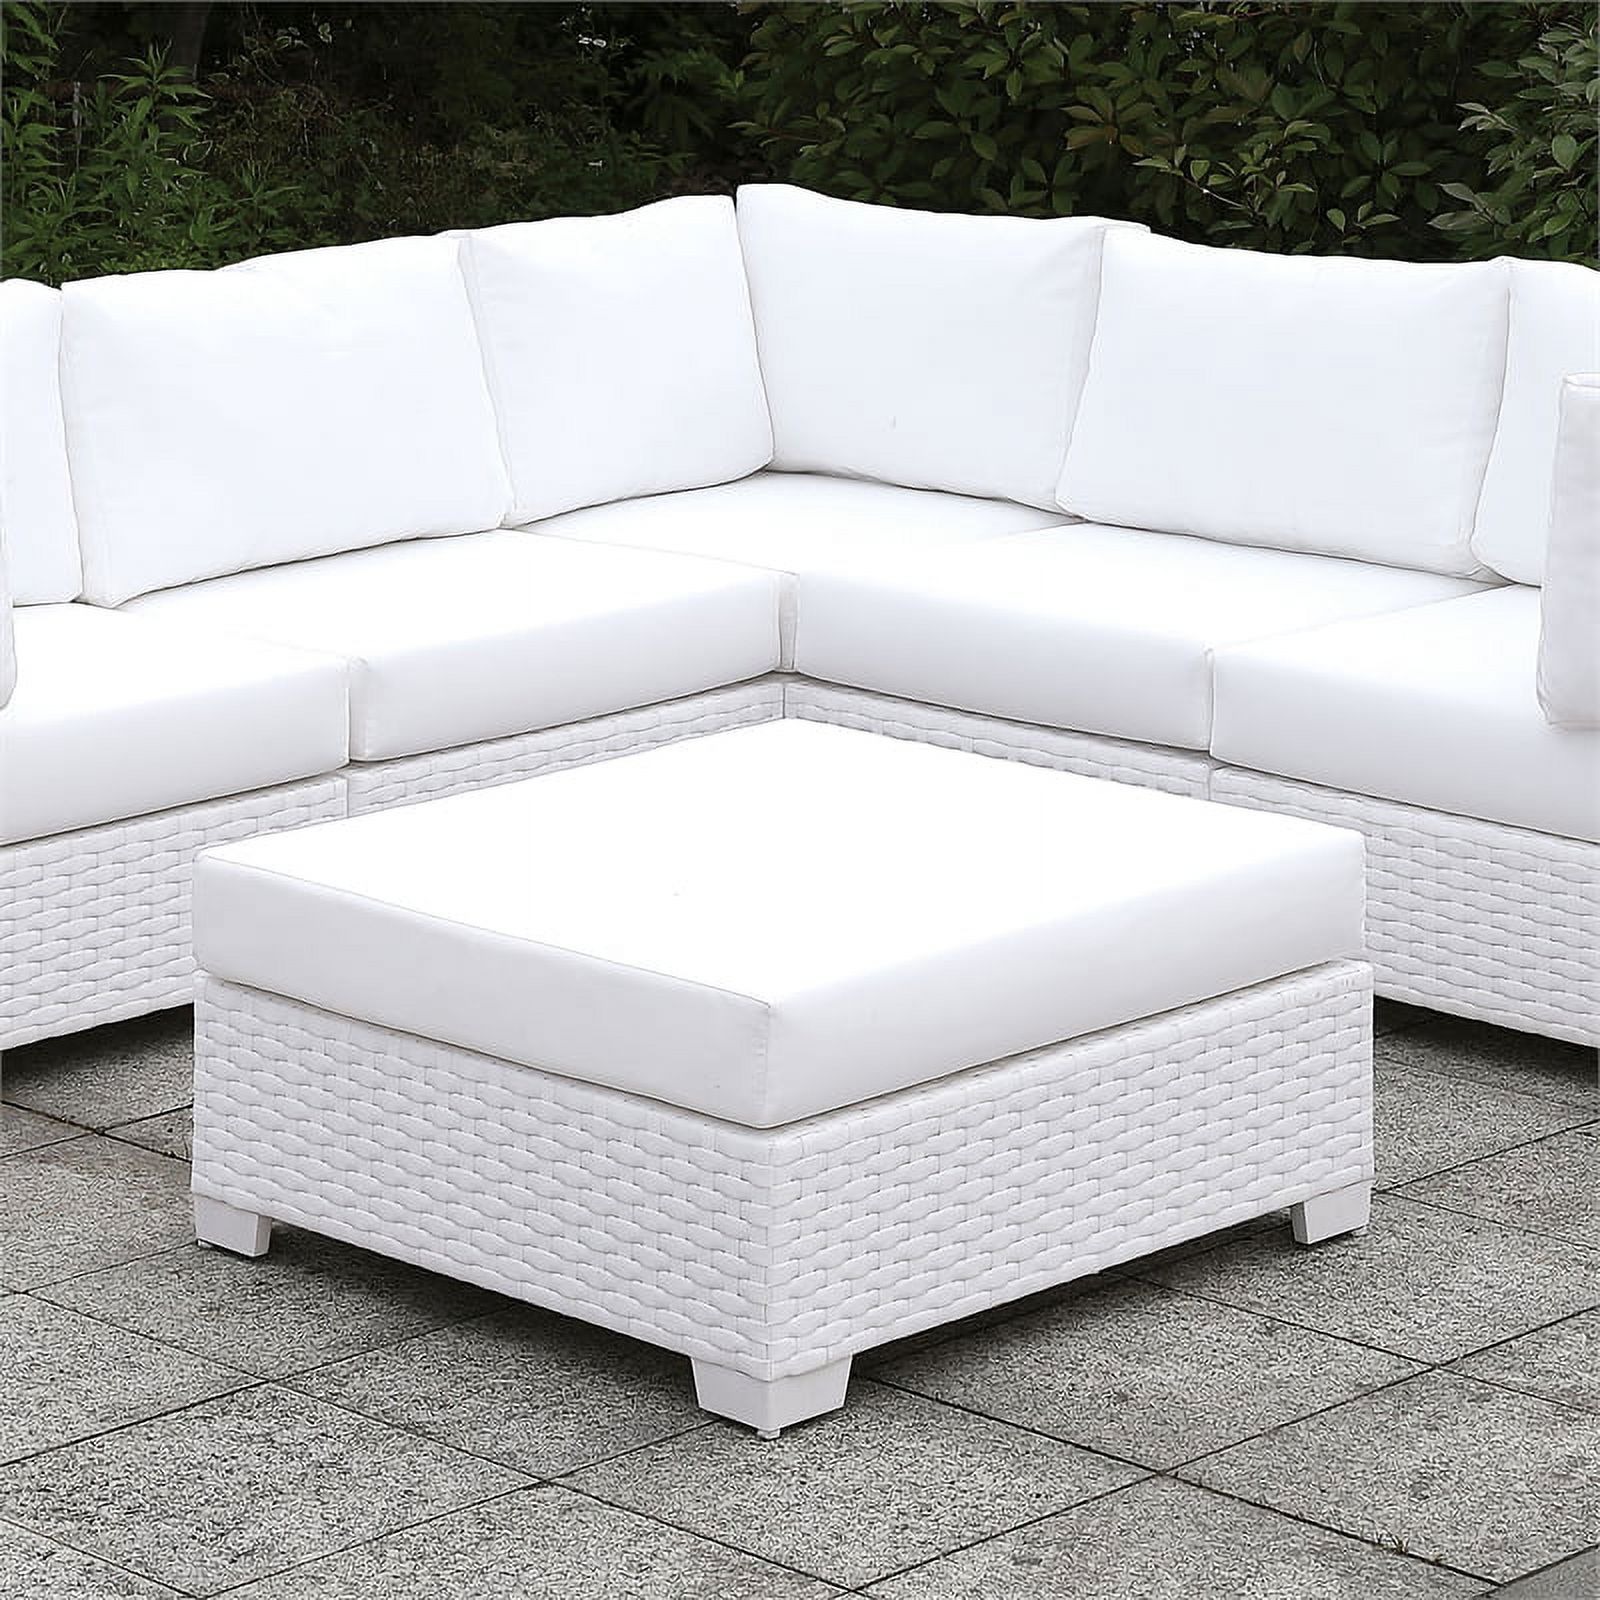 Furniture of America Arthur Contemporary Rattan Large Patio Ottoman in White - image 4 of 5